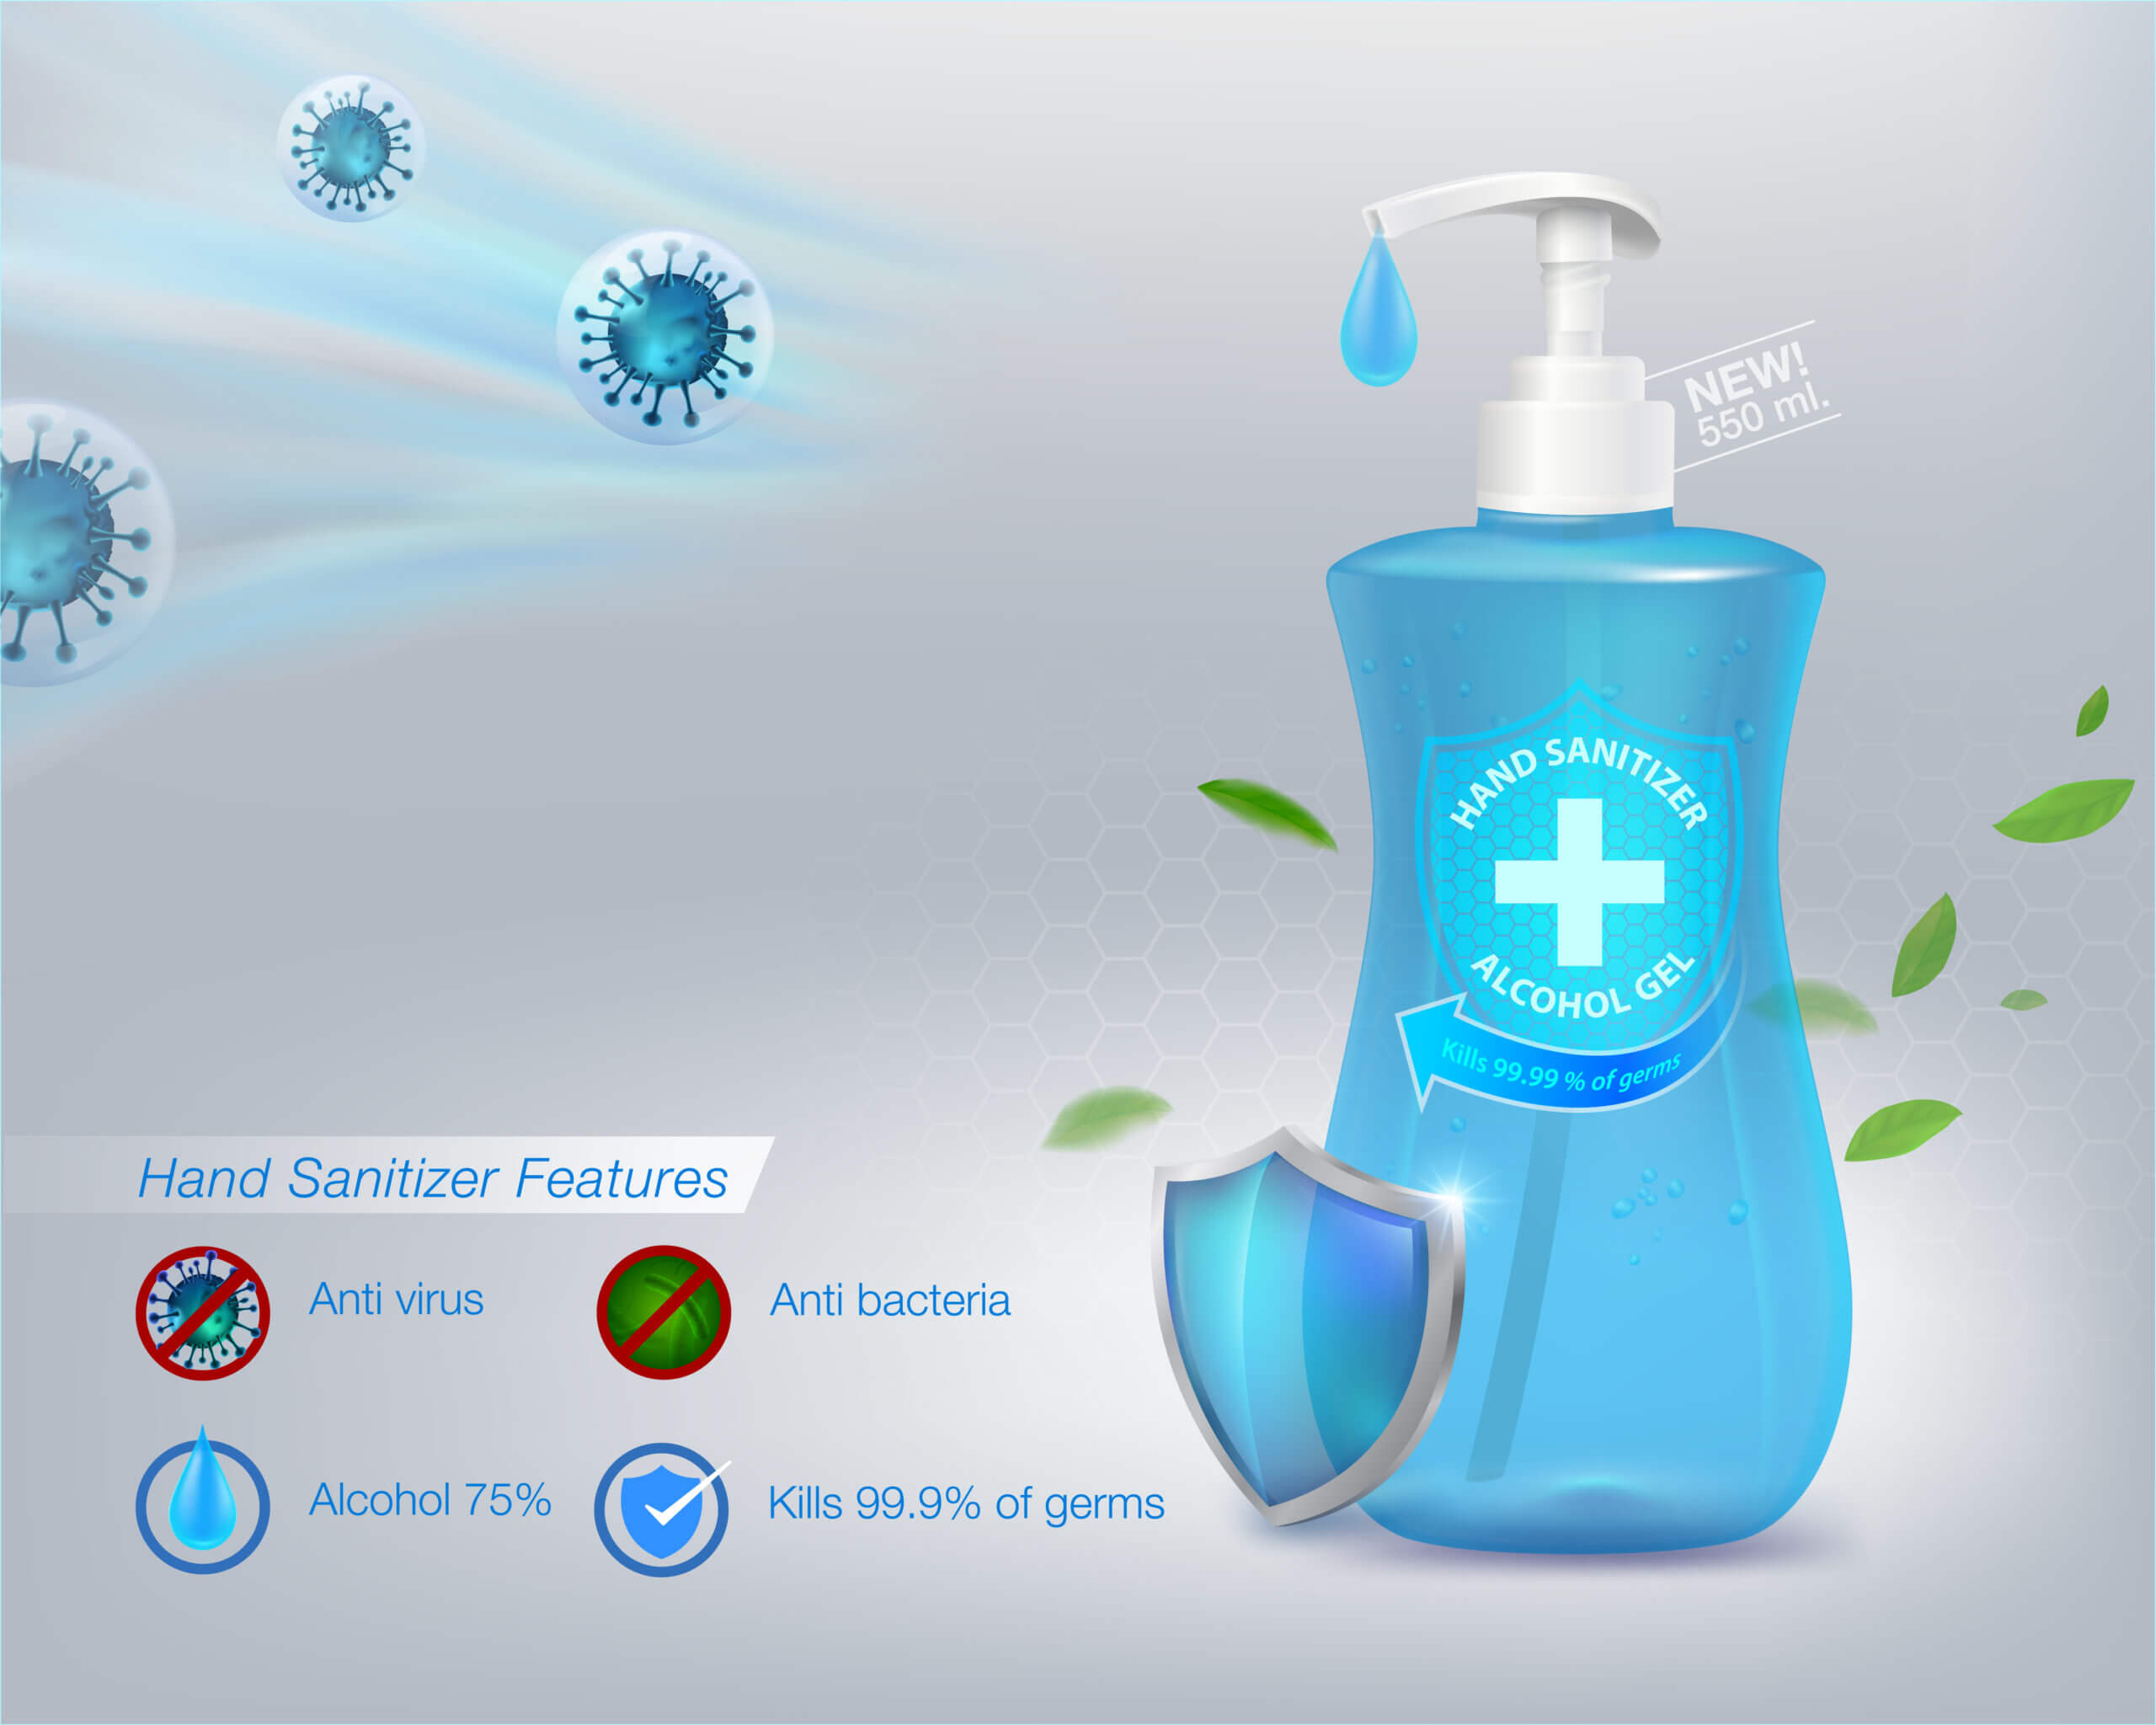 Hand Sanitizer Testing Services